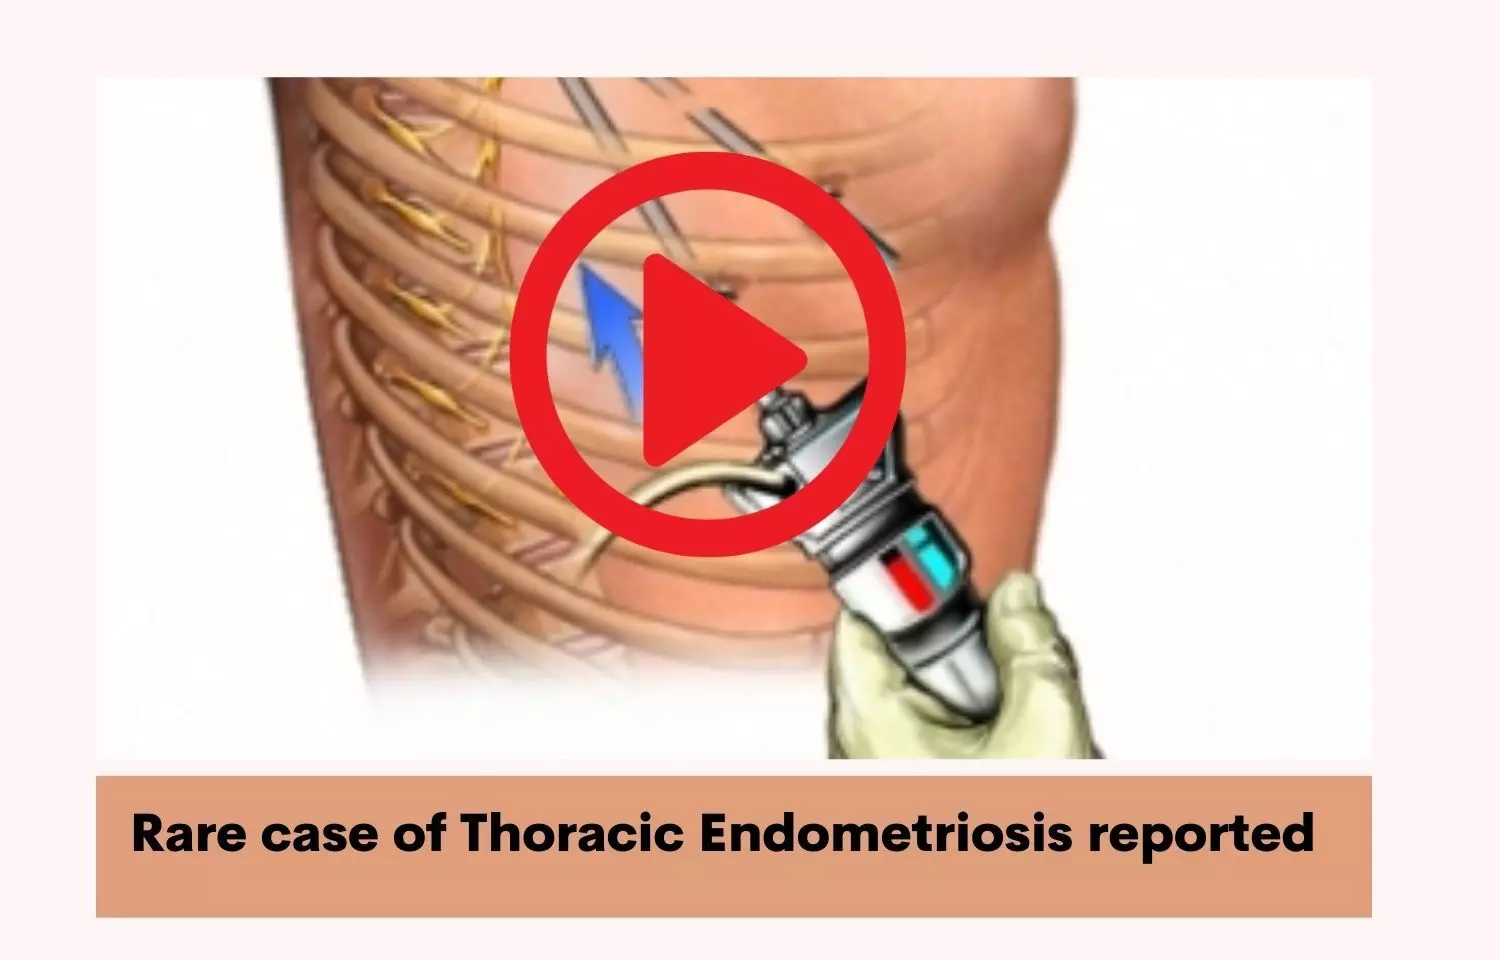 Thoracic Endometriosis rare case reported